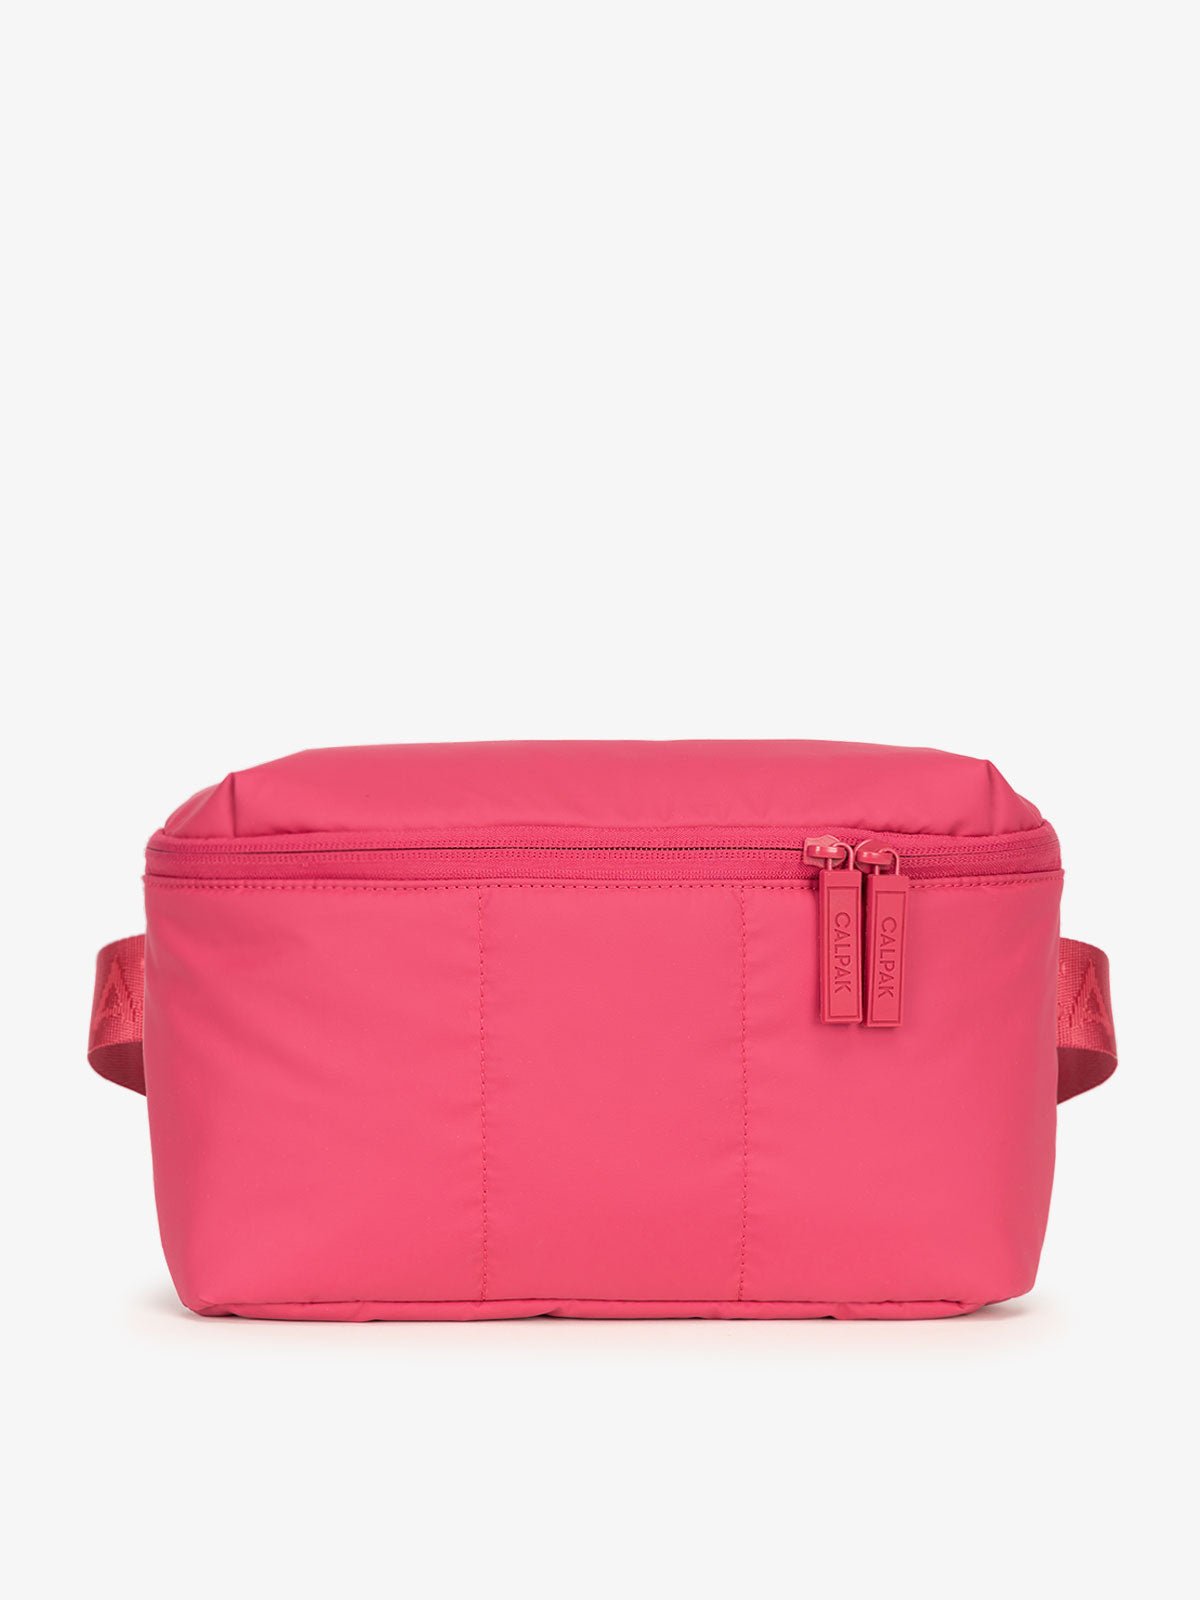 CALPAK Luka Belt Bag with soft puffy exterior in pink dragonfruit